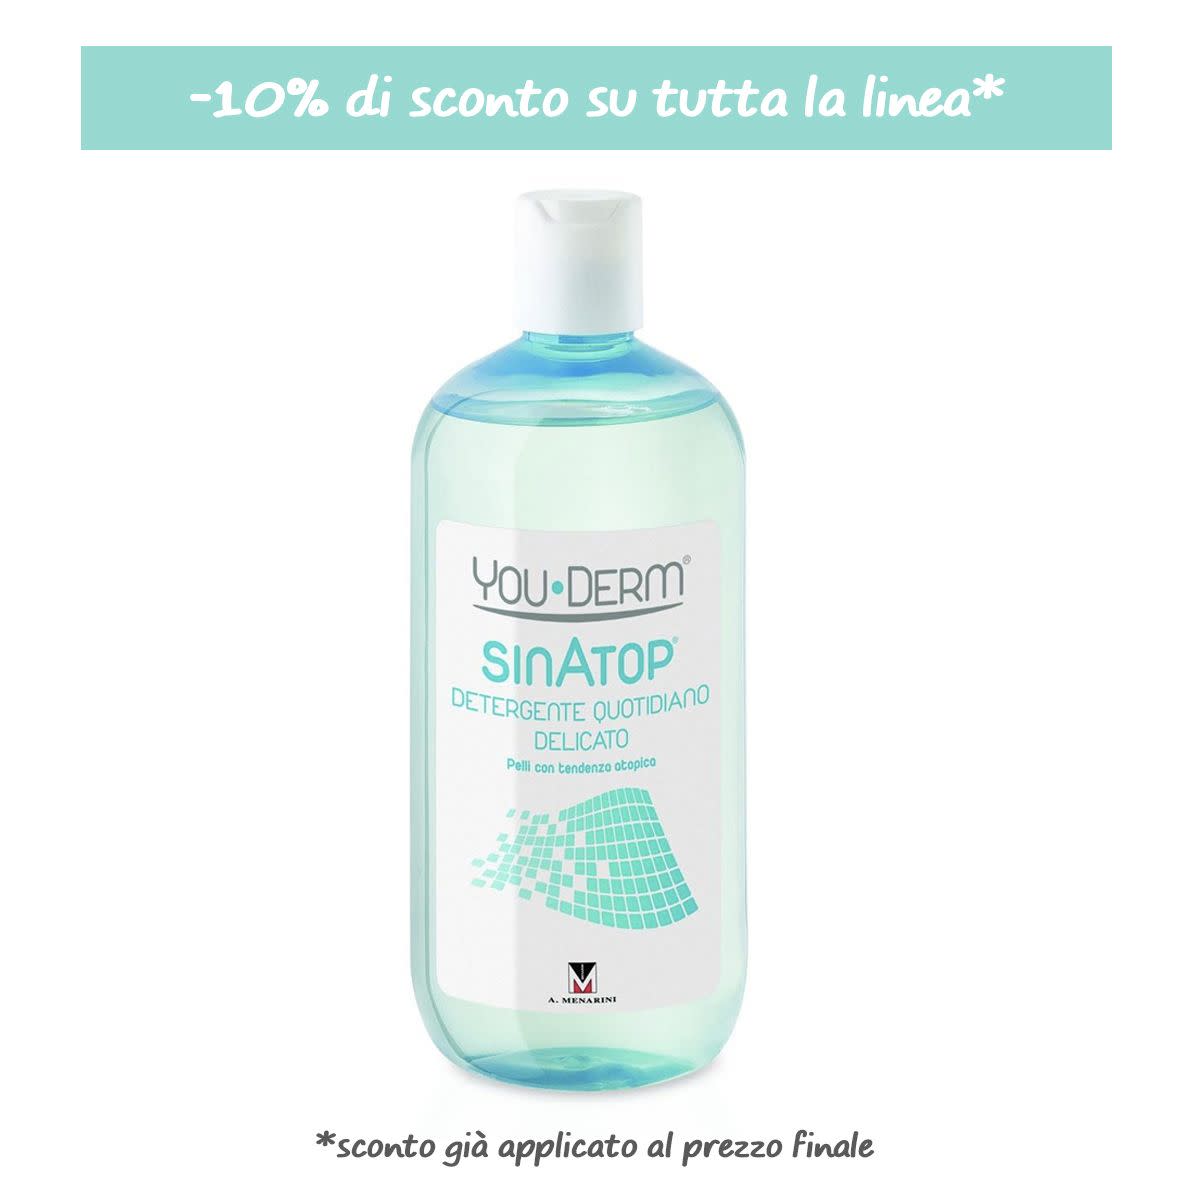 924570500 - Youderm Sinatop Detergente Quotidiano Delicato 500ml - 7874688_2.jpg